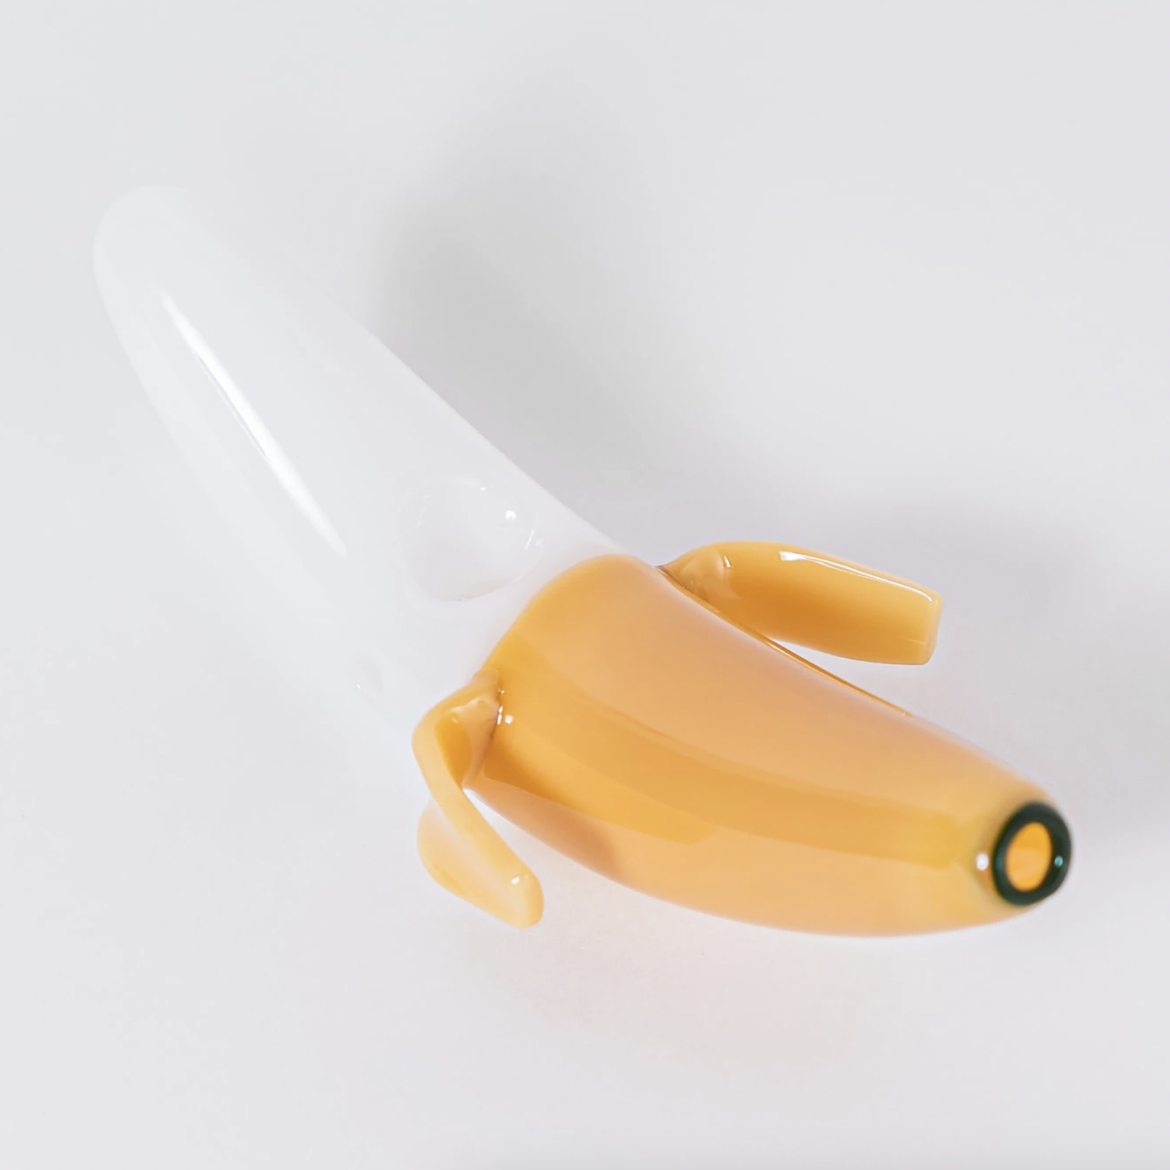 Glass Fruit Pipe - Banana